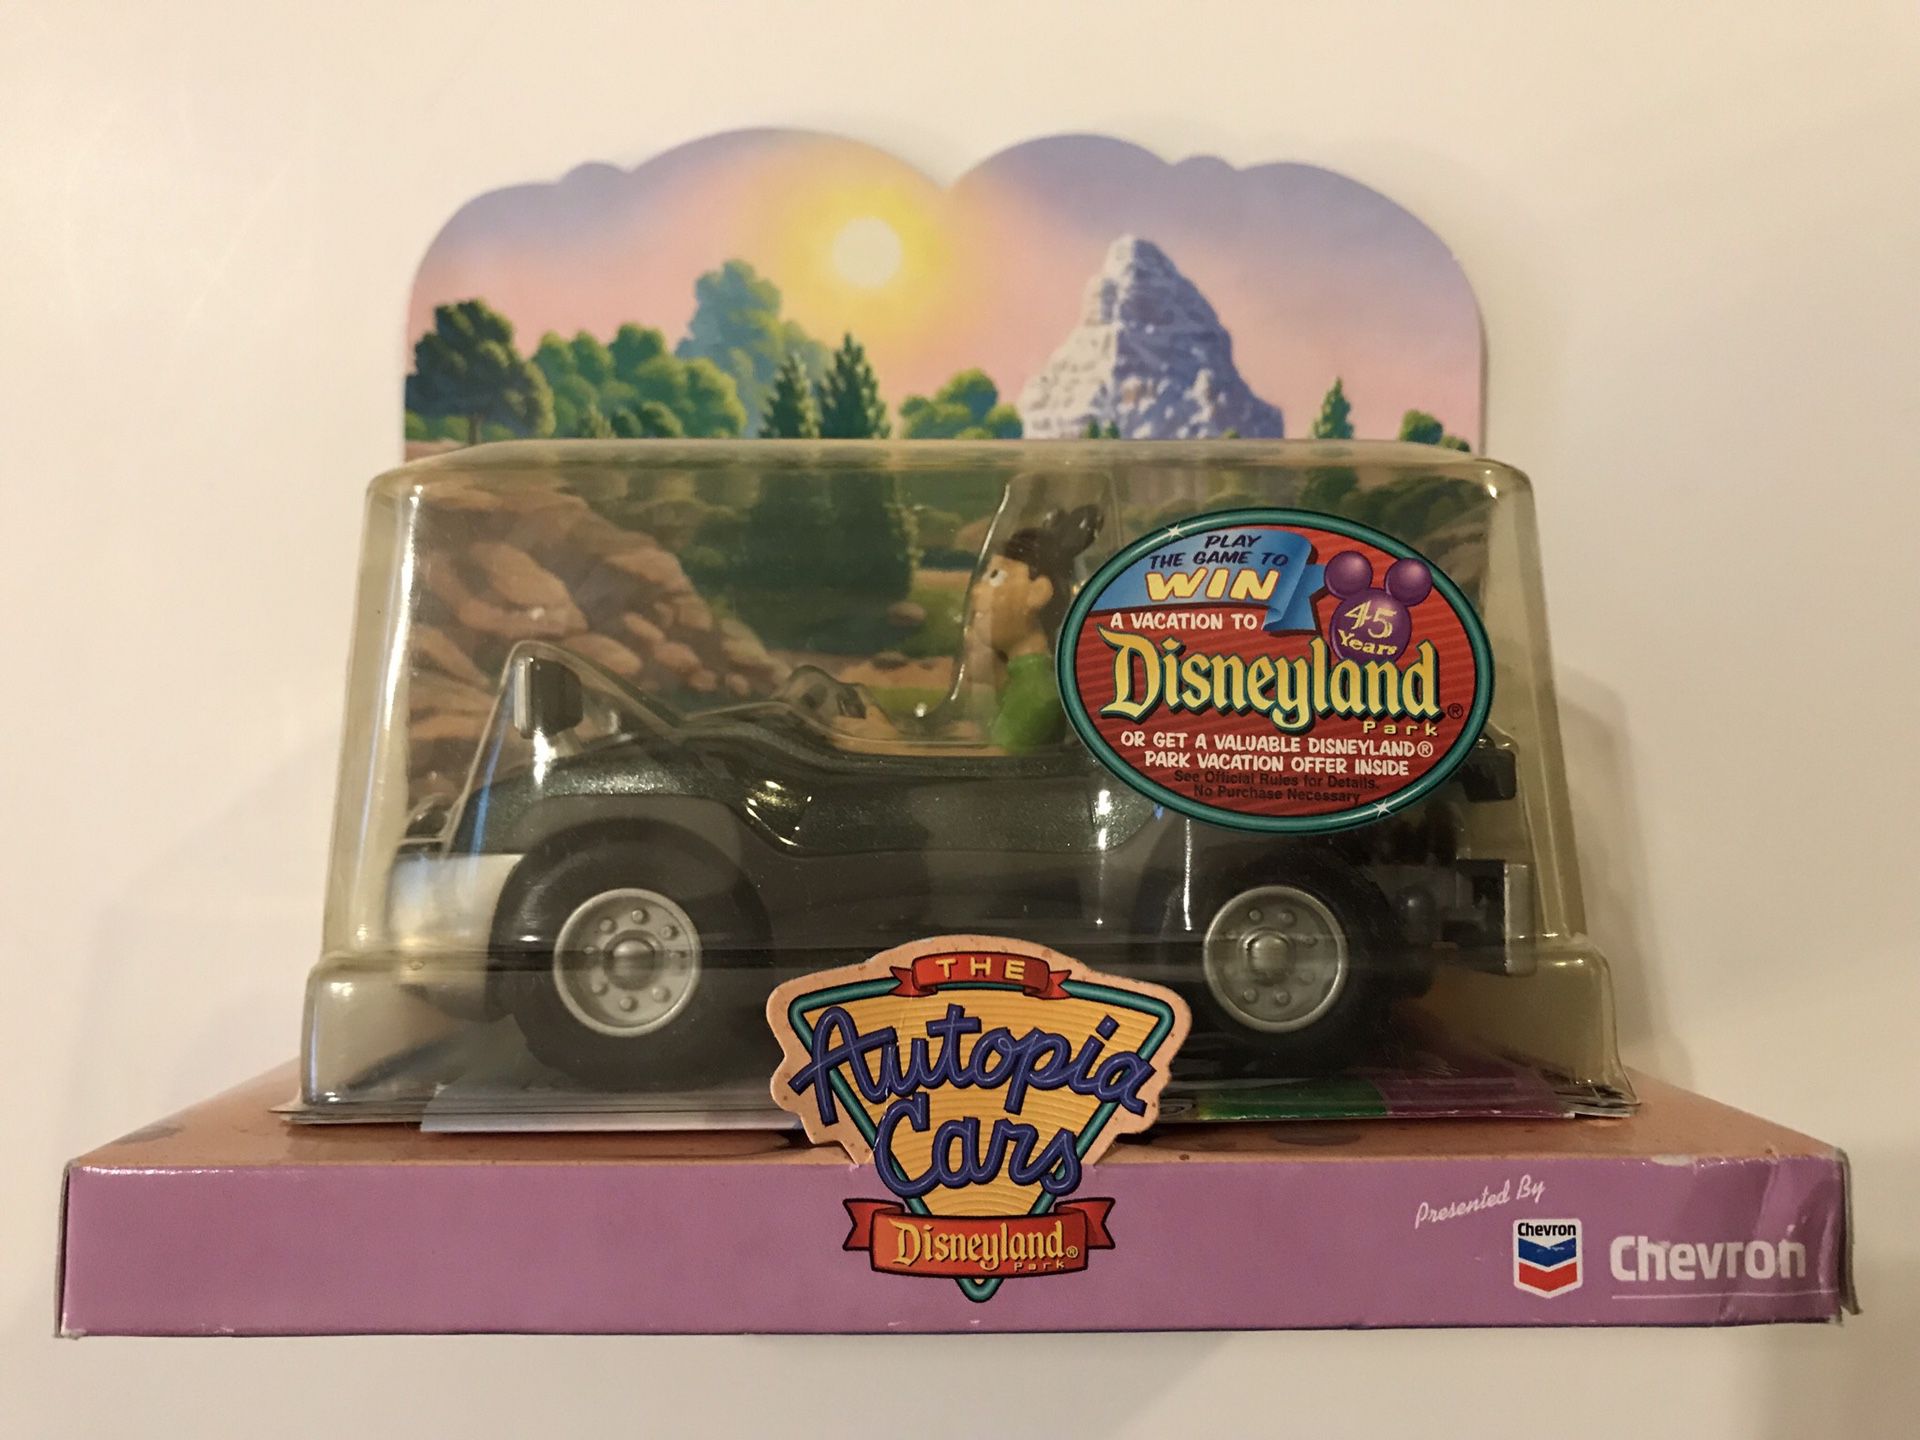 Disneyland Autopia Cars Chevron 2000 "Dusty" Toy Collectible (NIP)